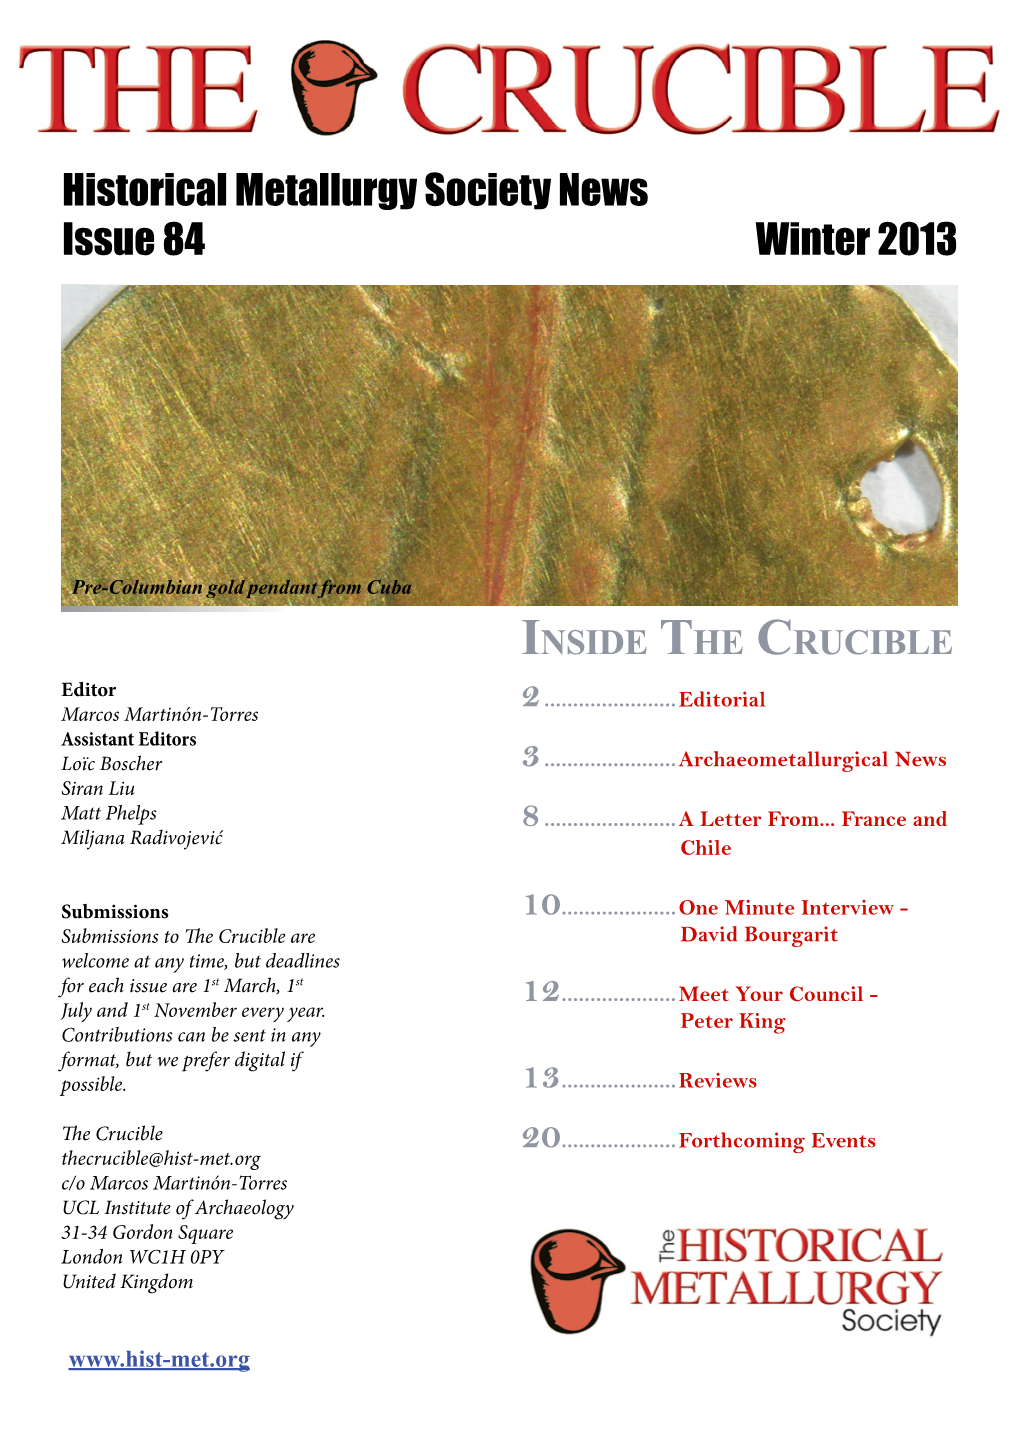 Historical Metallurgy Society News Issue 84 Winter 2013